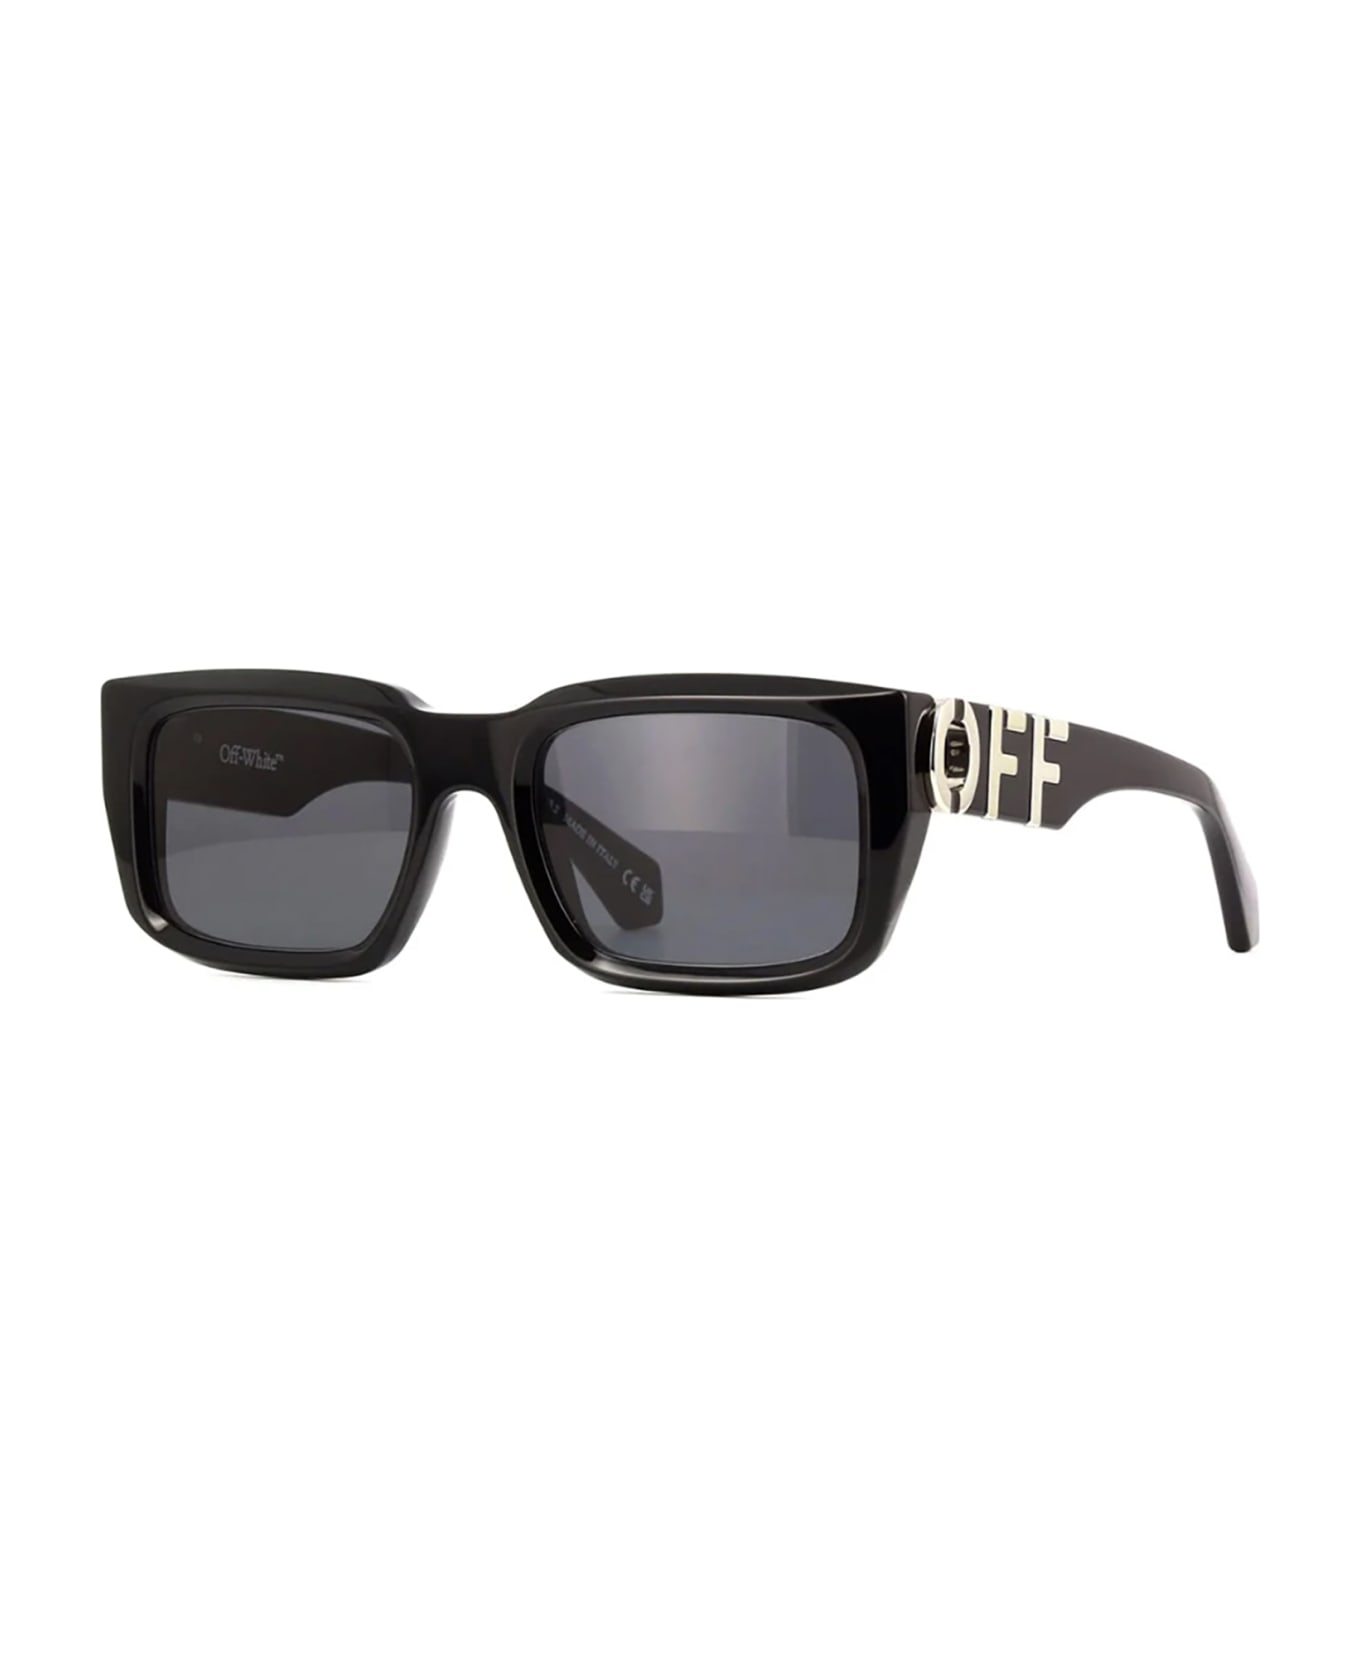 Off-White OERI125 HAYS Sunglasses - Black Dark Grey